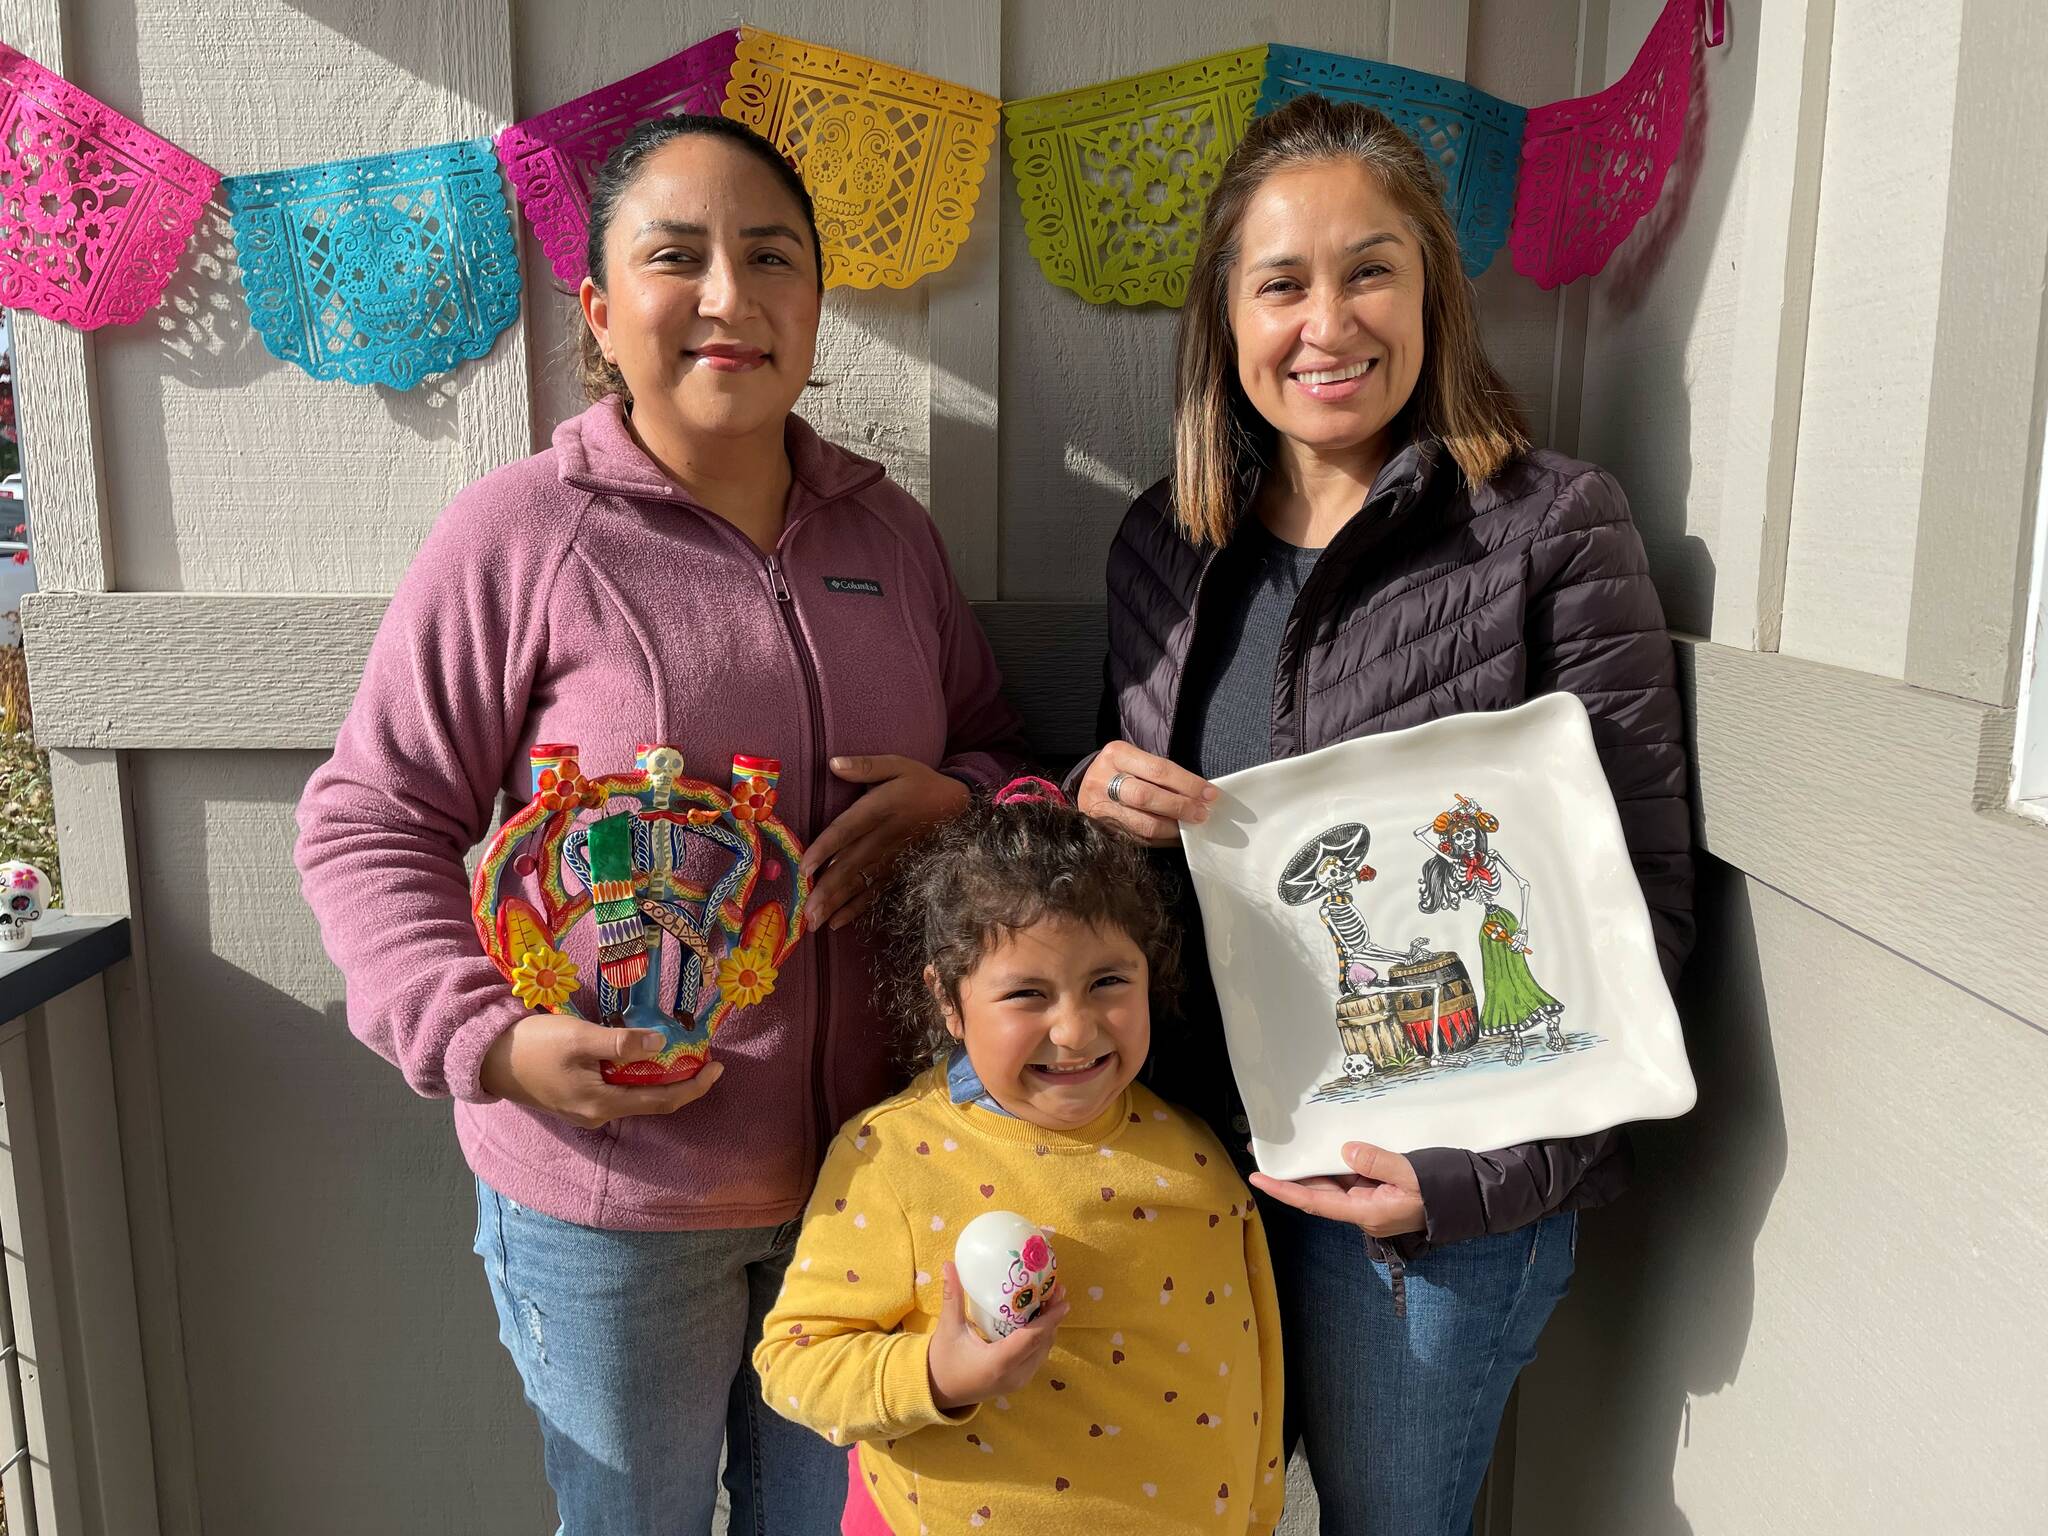 Contributed photo by the Joyce L. Sobel Family Resource Center
Carmen Orozco, Adriana Gonzalez and Luna celebrating Dia de los Muertos